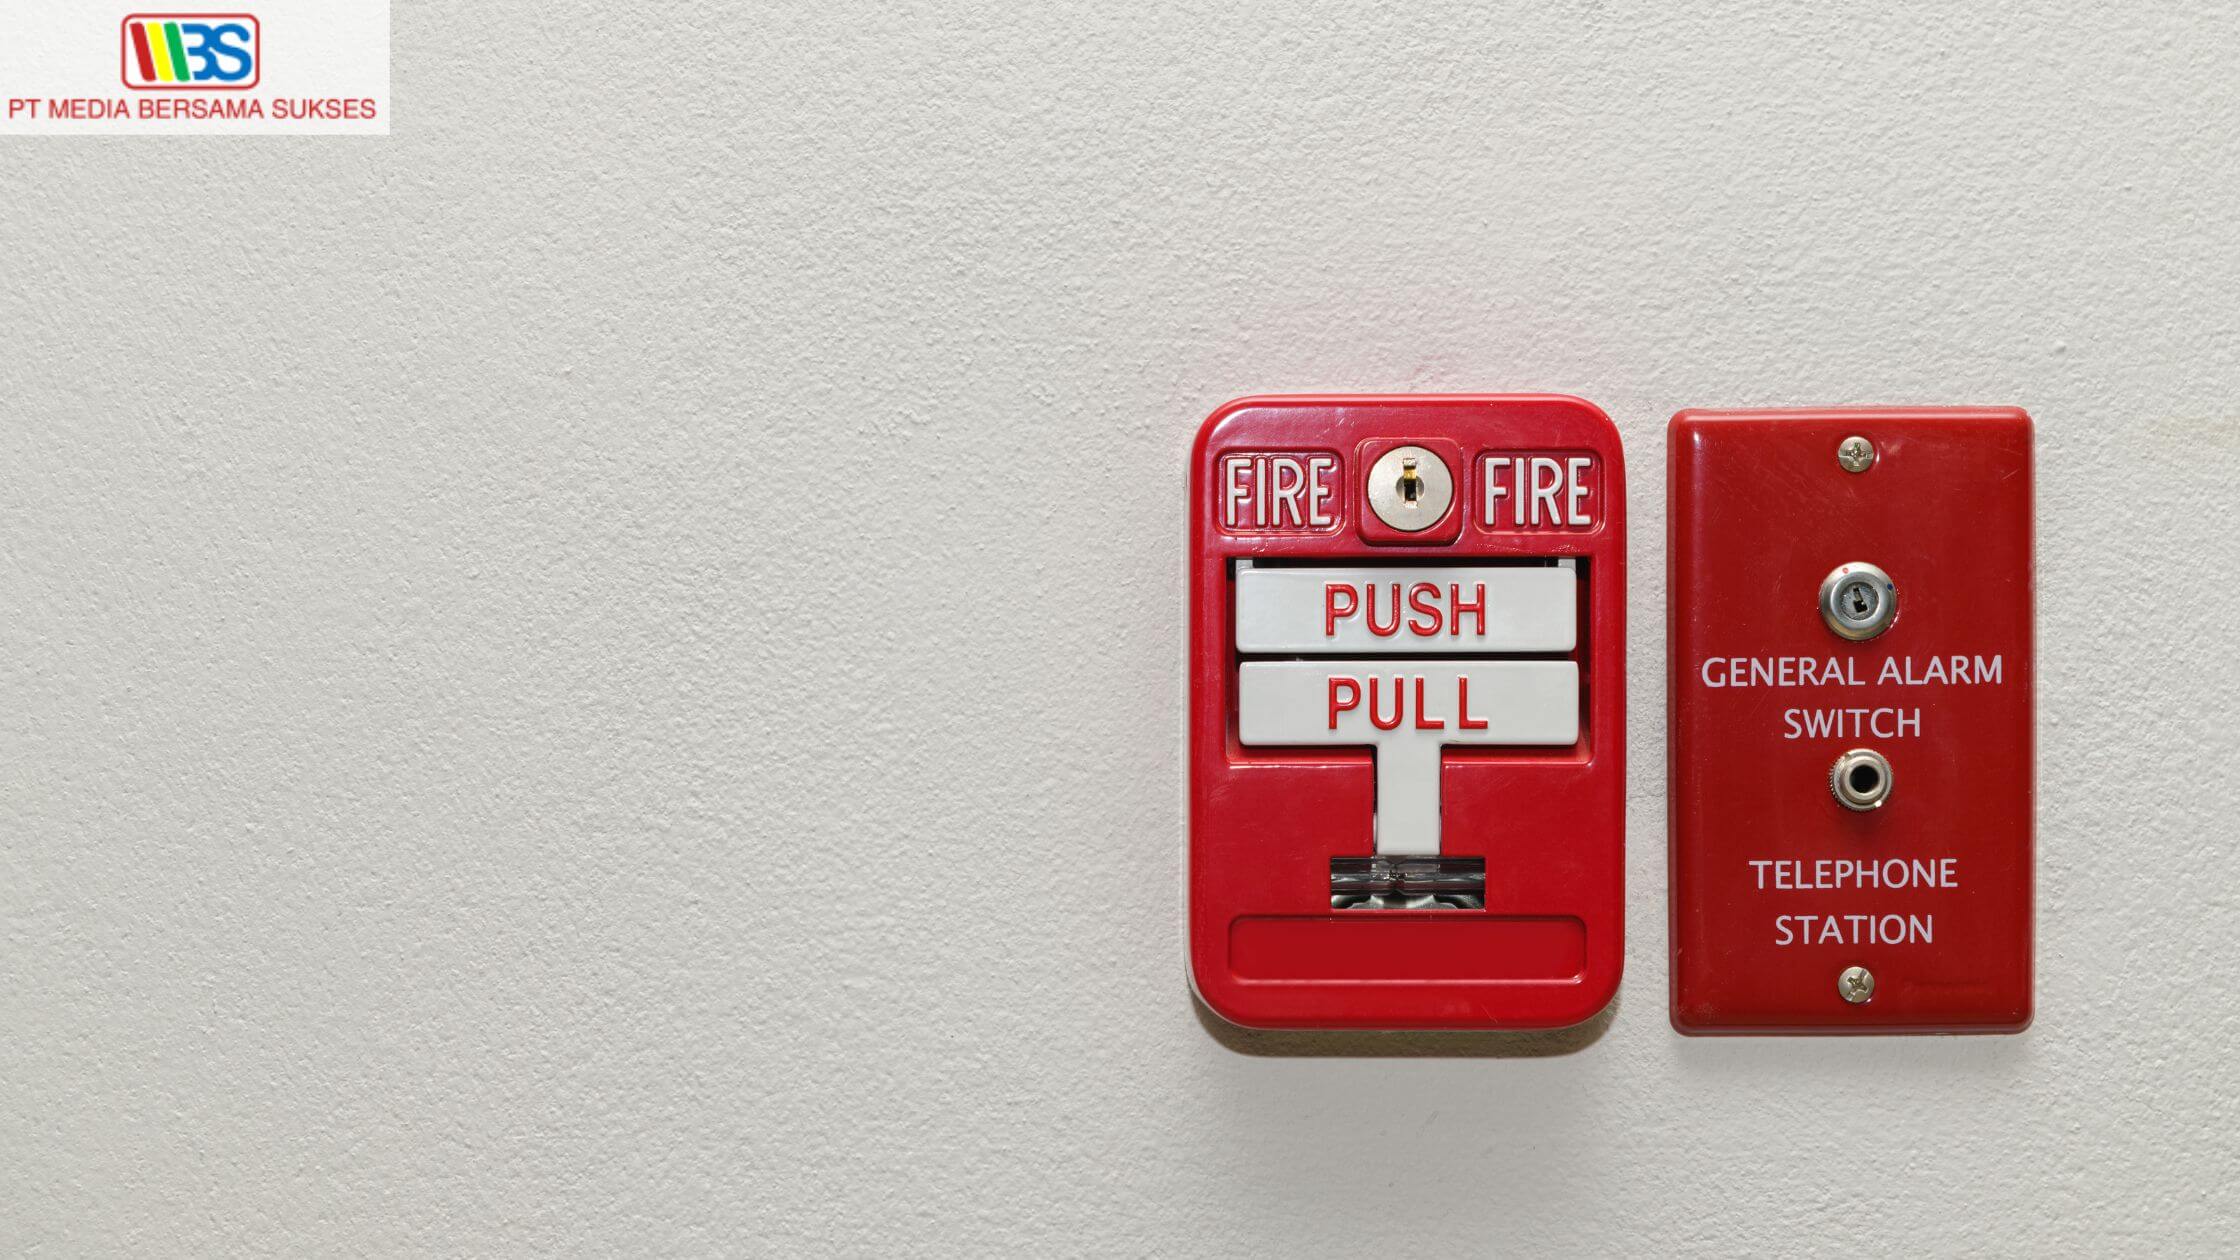 Mengenal Jenis dan Cara Kerja Fire Alarm System